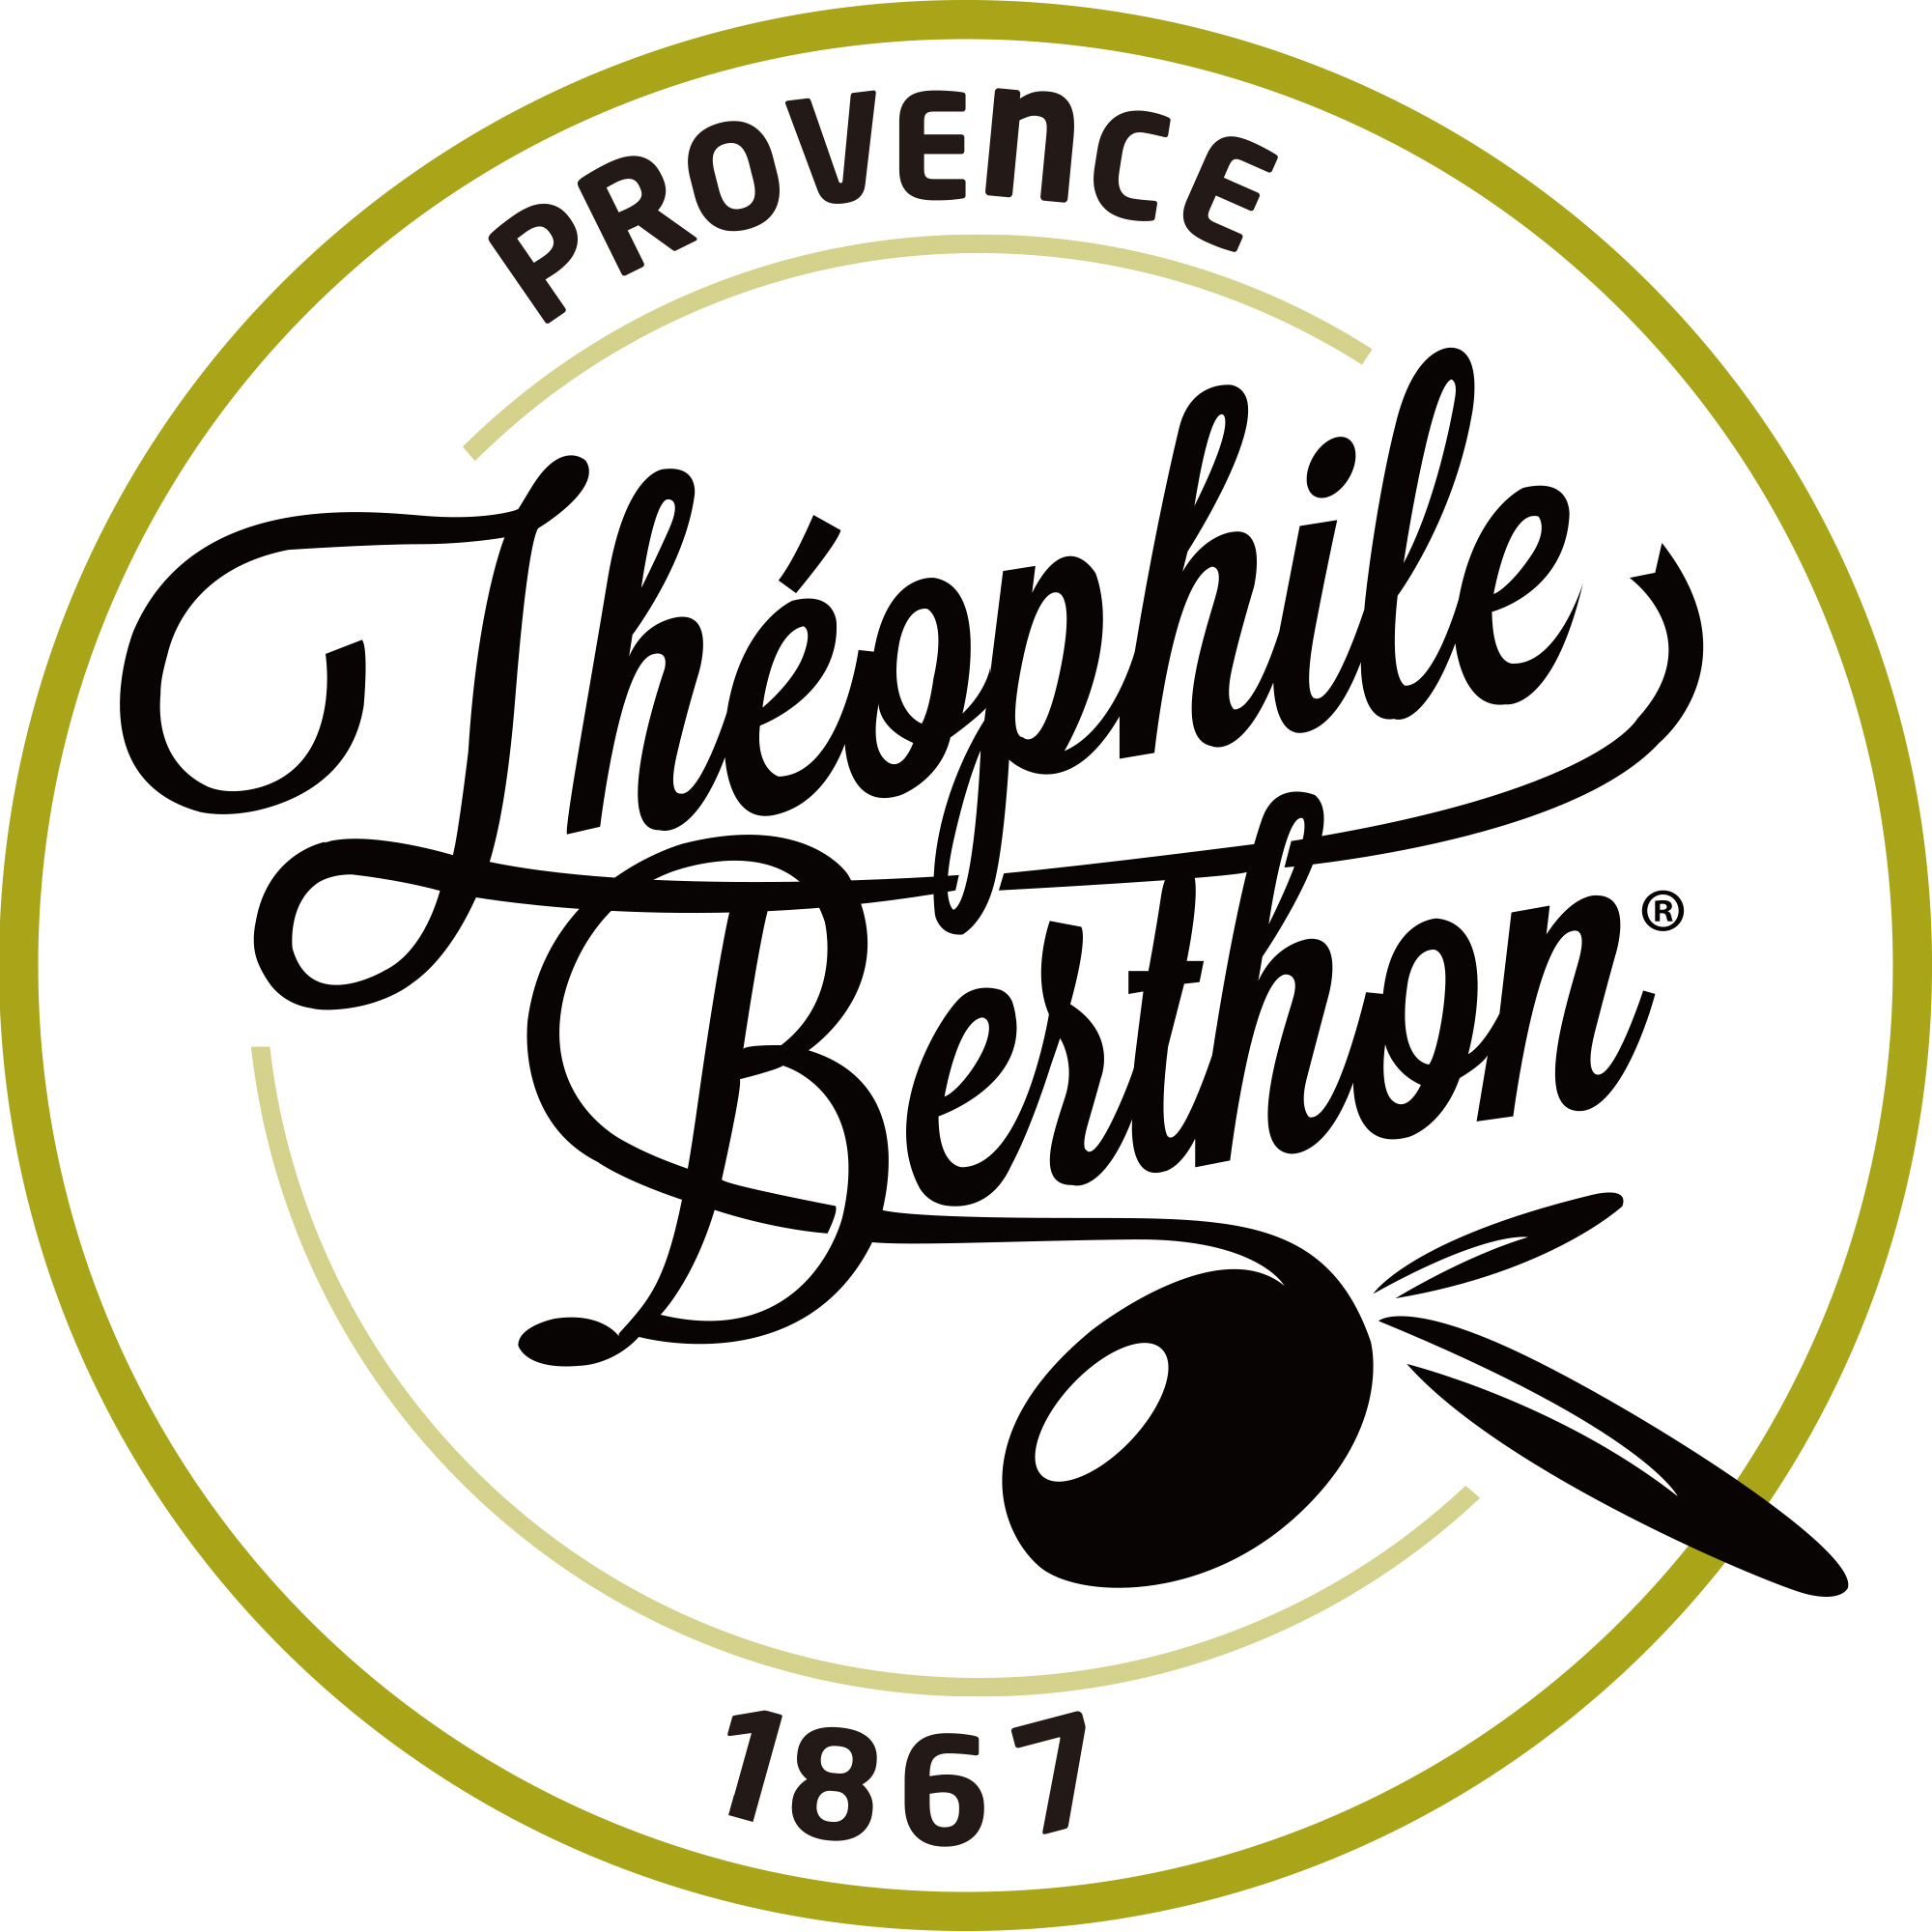 Theophile berthon